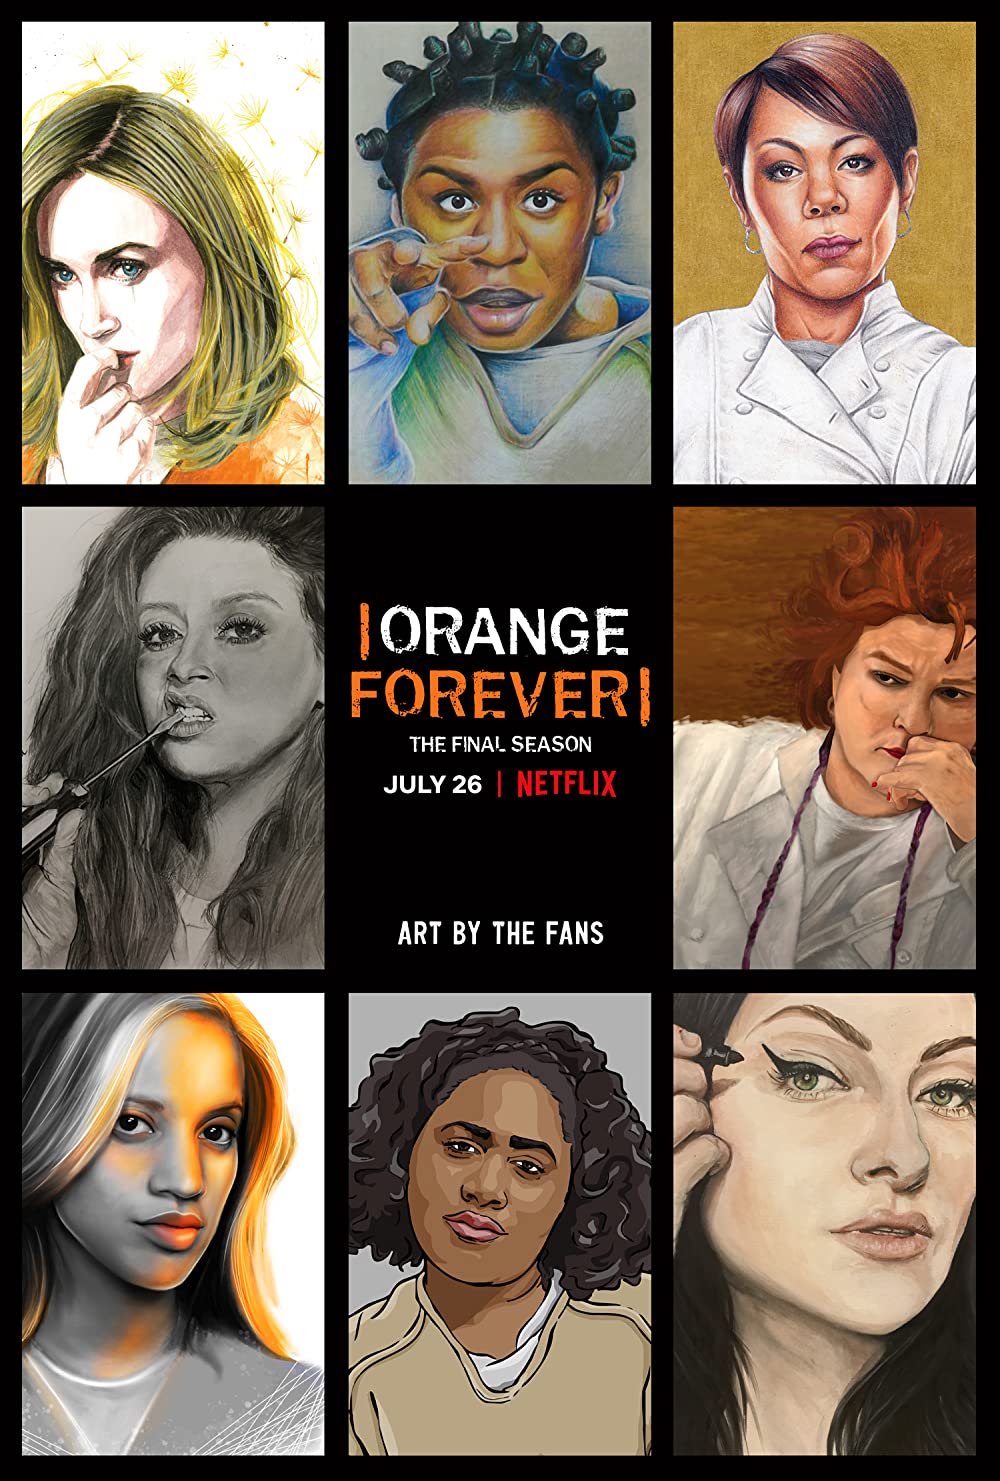 Orange Is the New Black poster